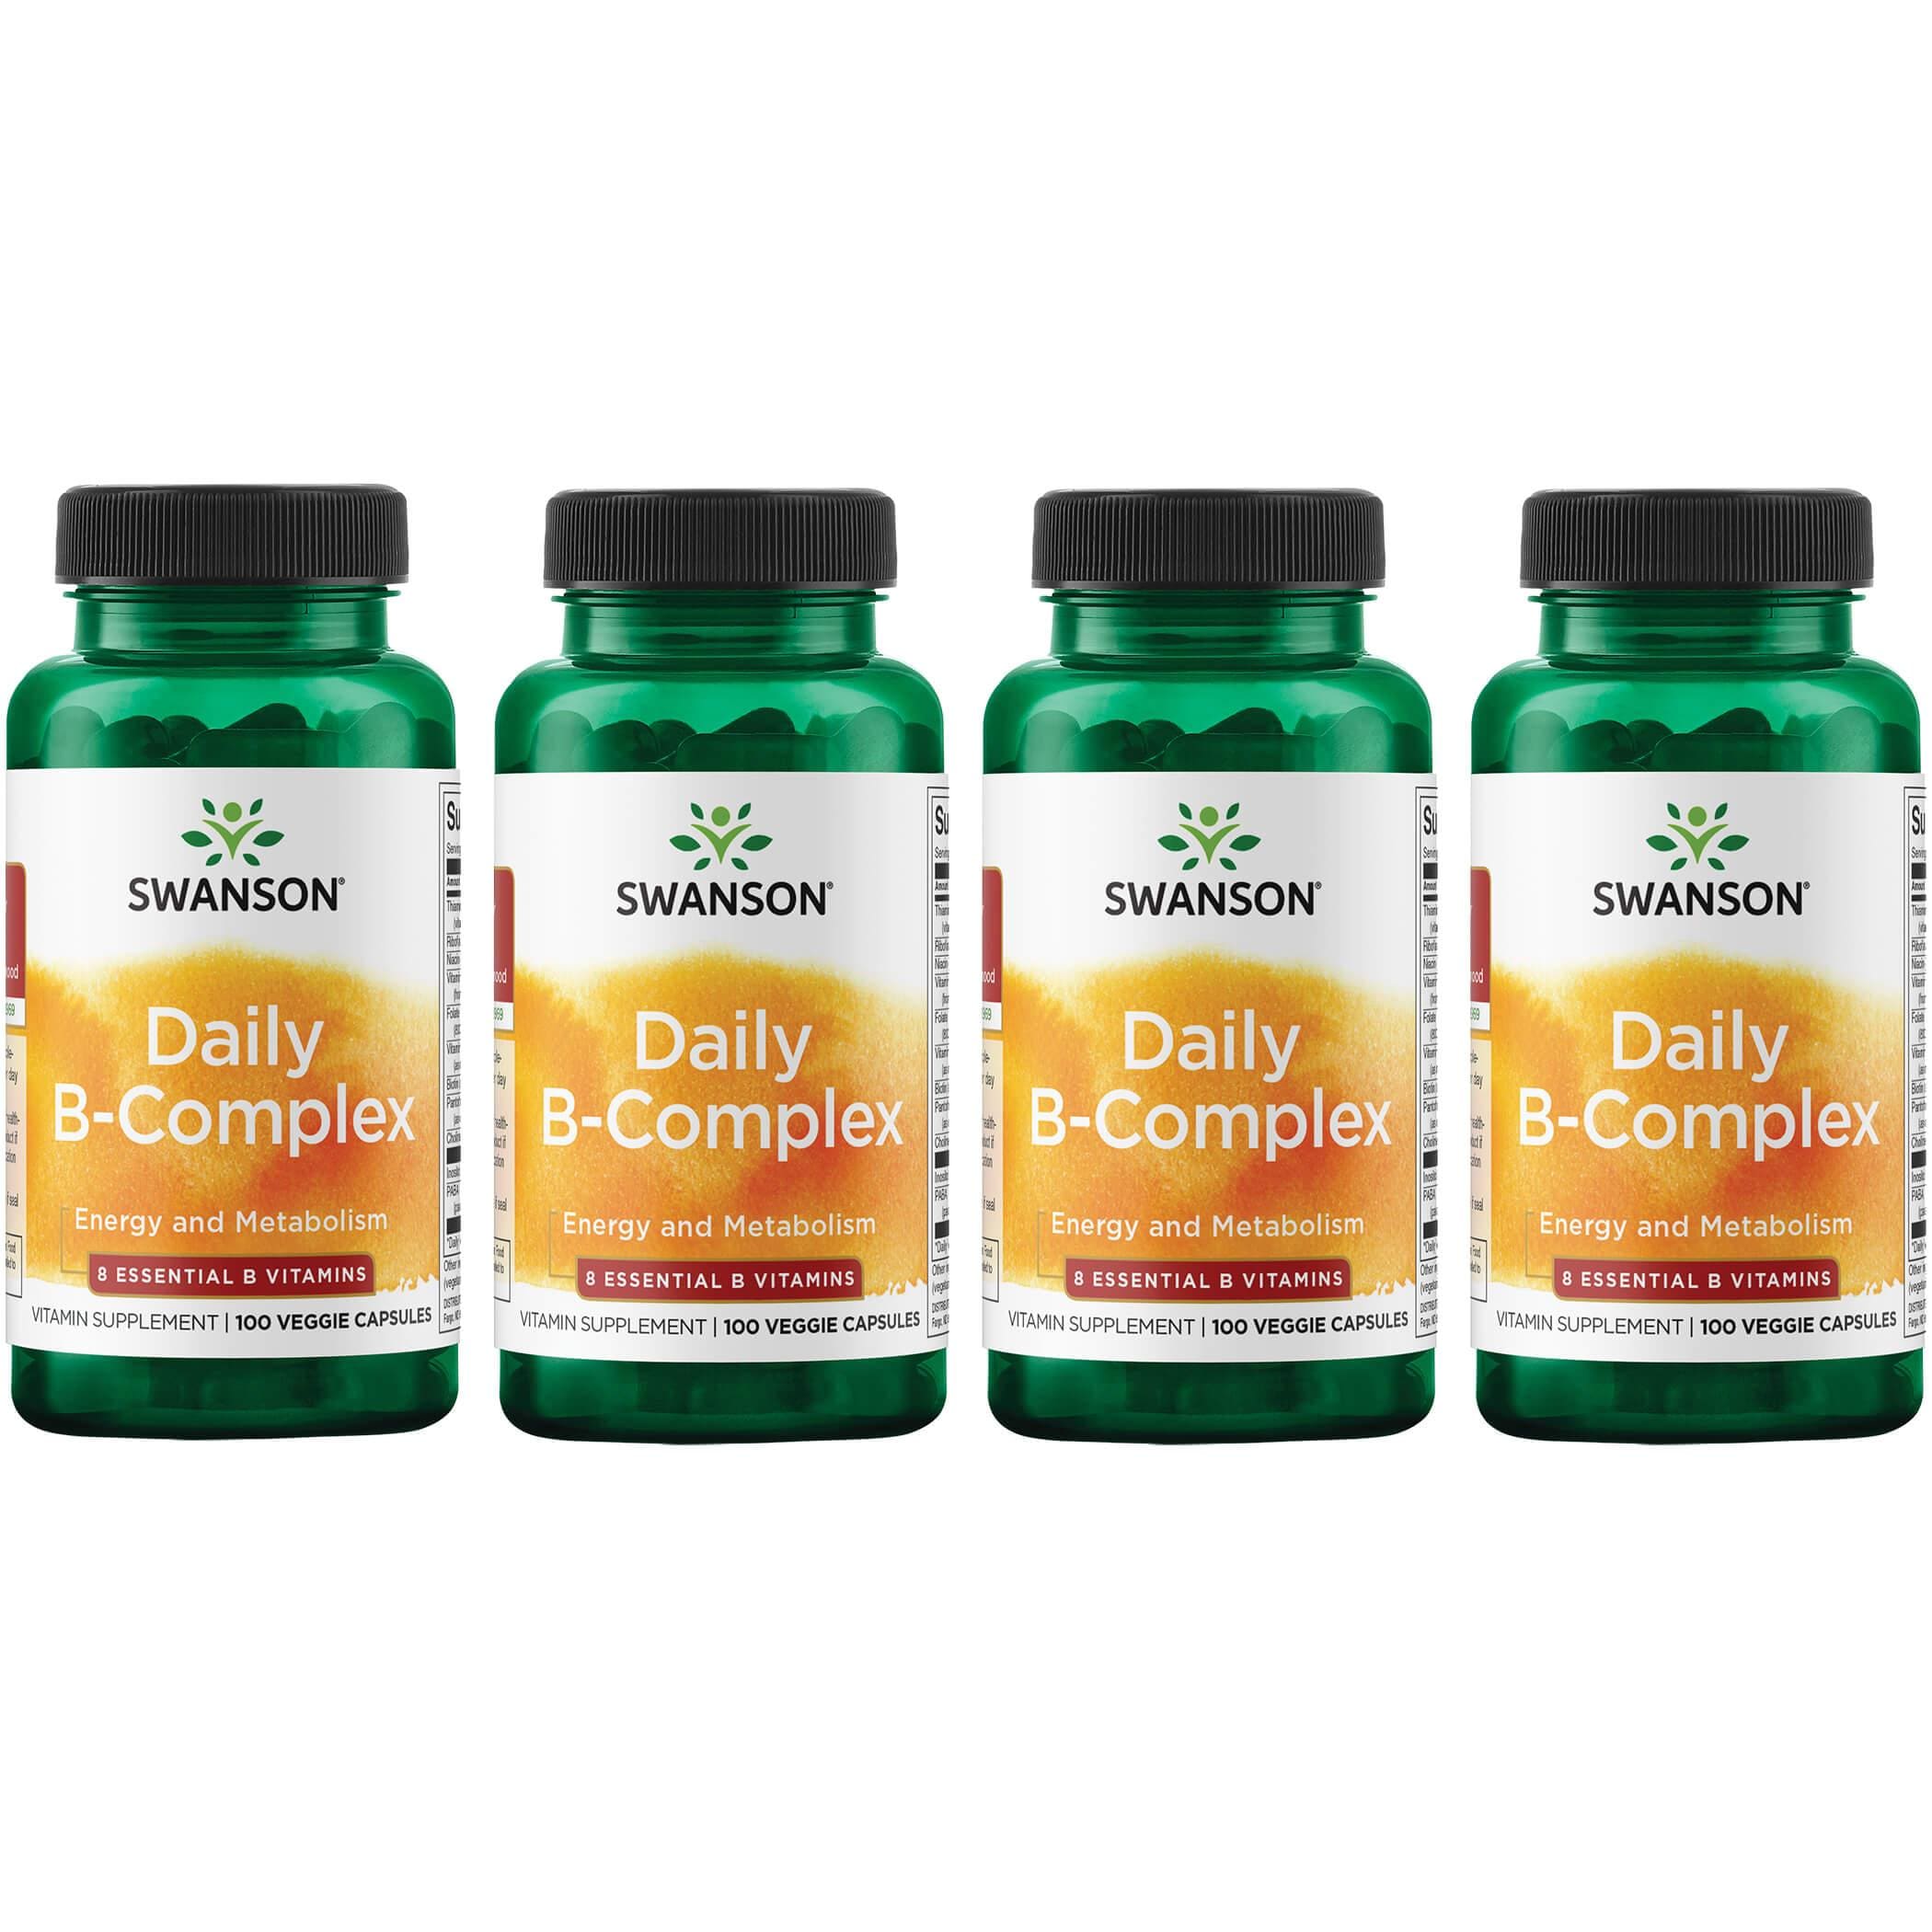 Swanson Premium Daily B-Complex 4 Pack Vitamin 100 Veg Caps Vitamin C